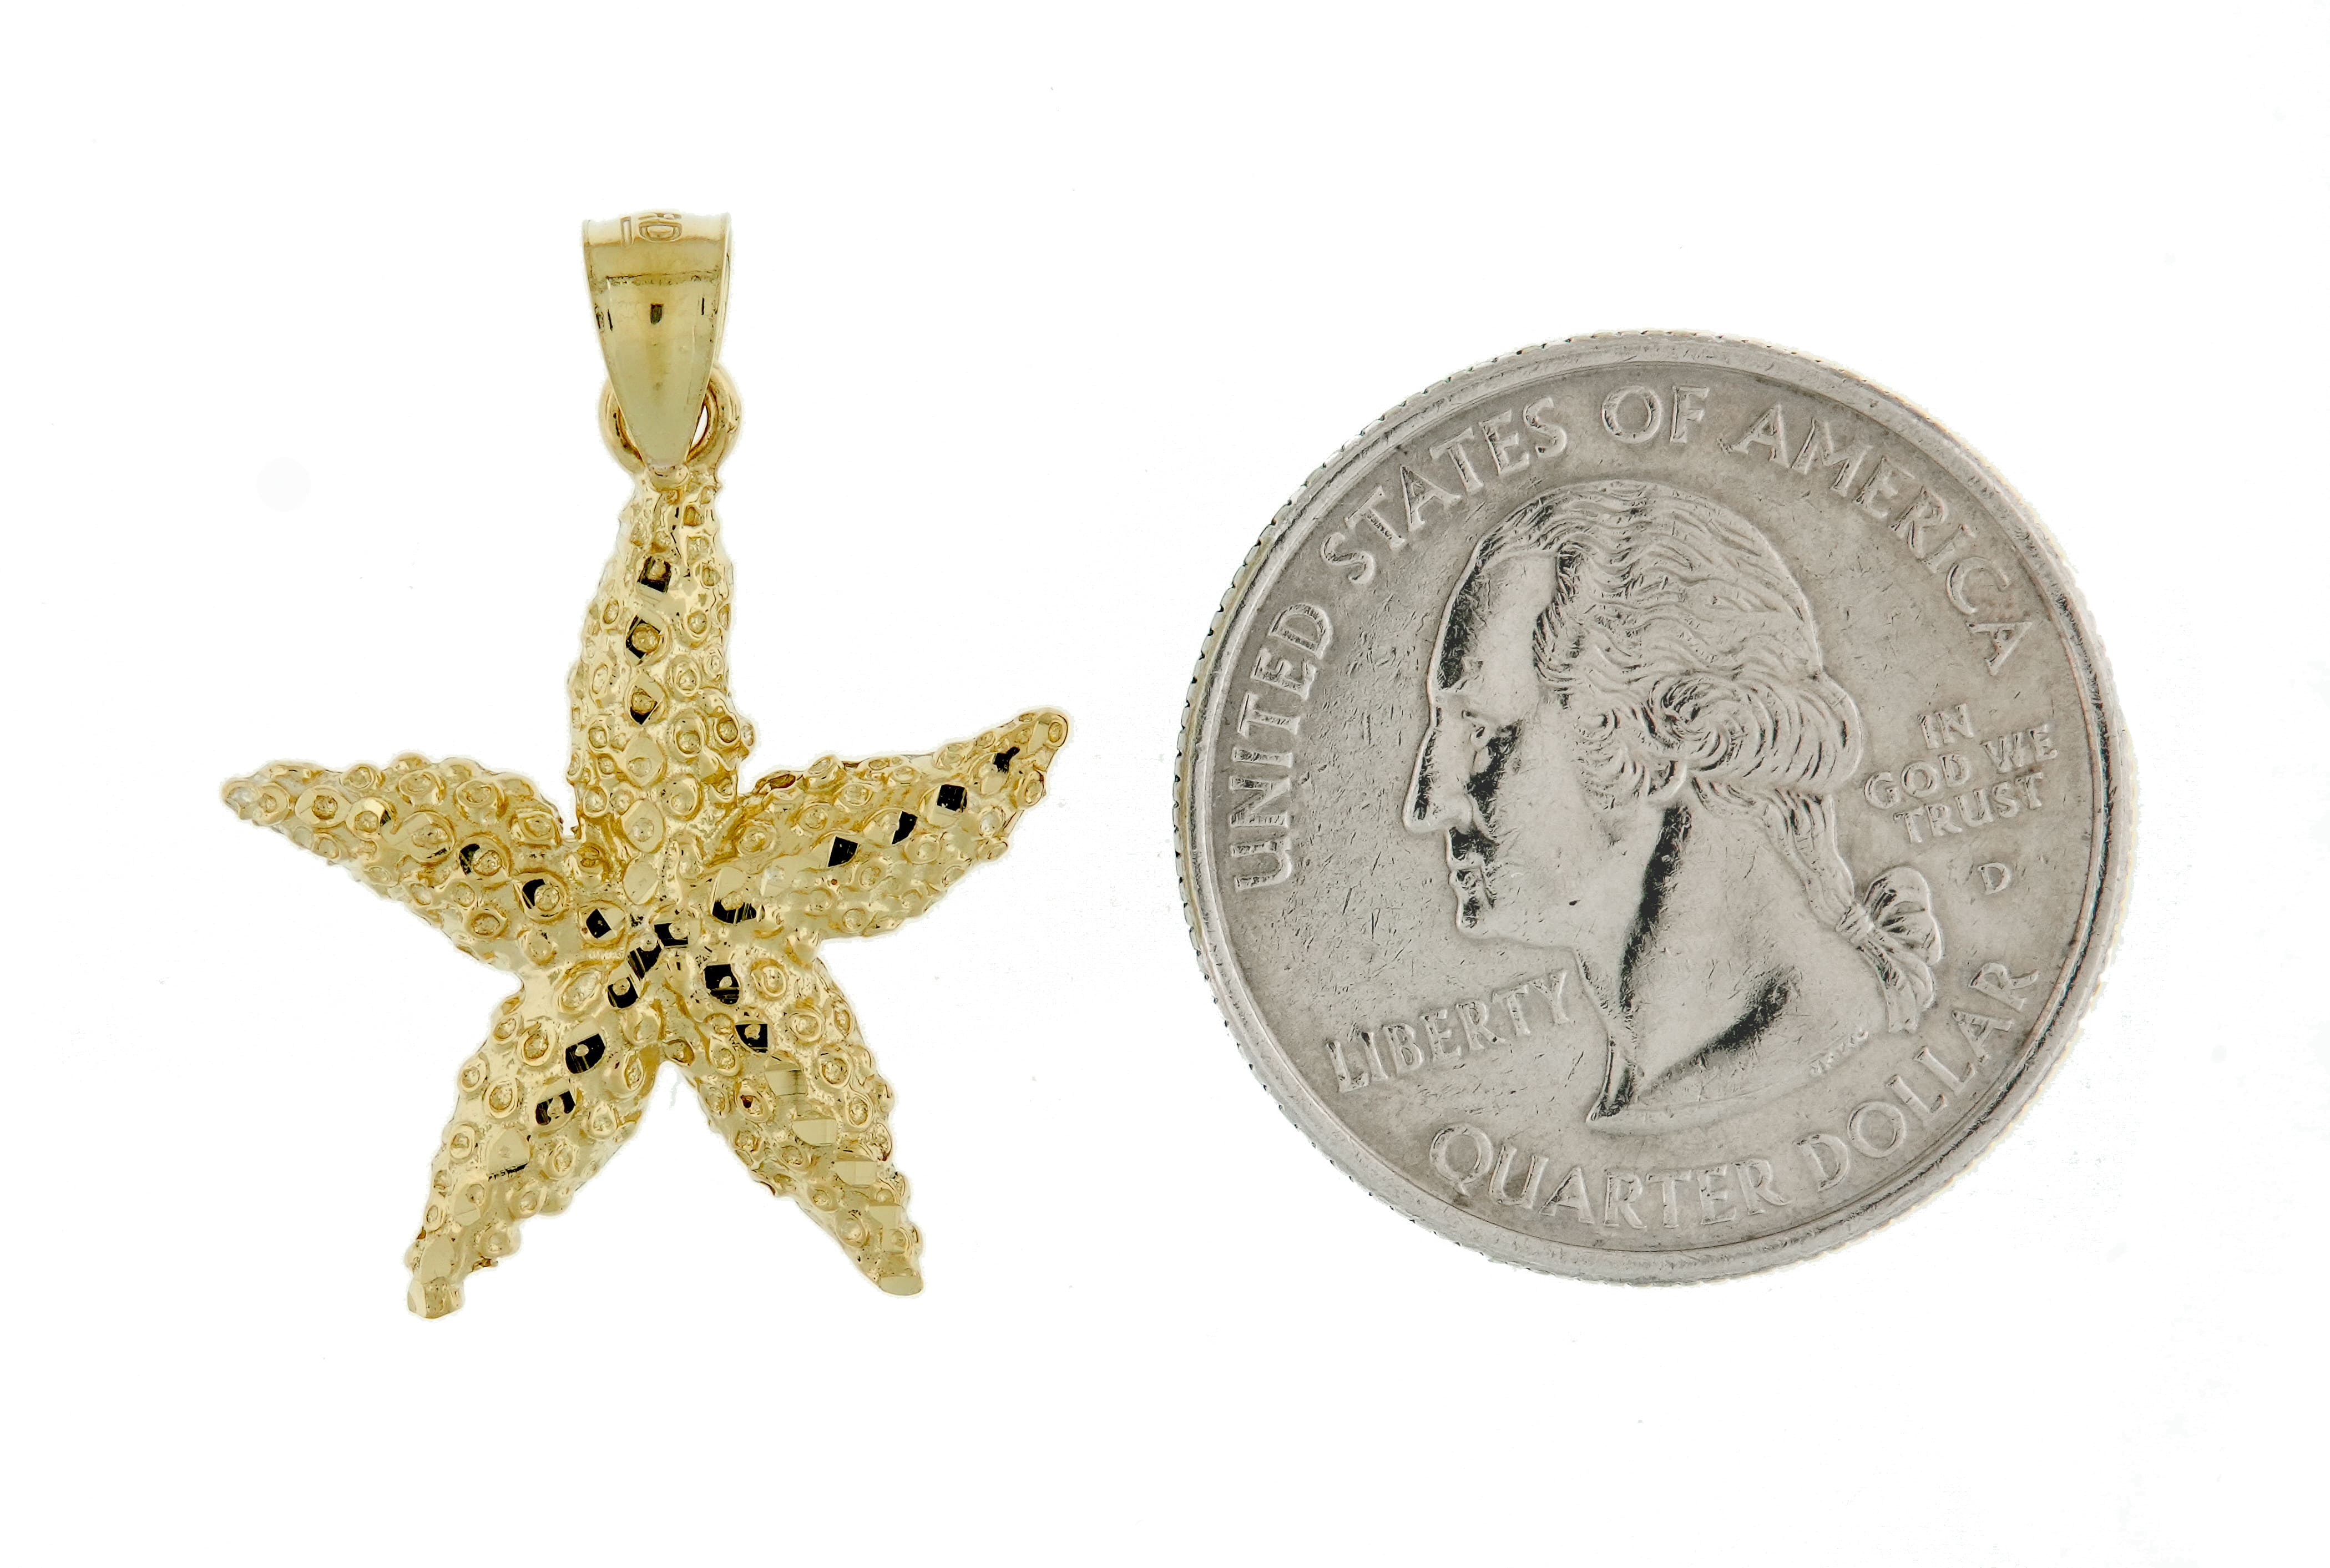 14k Yellow Gold Starfish Open Back Pendant Charm